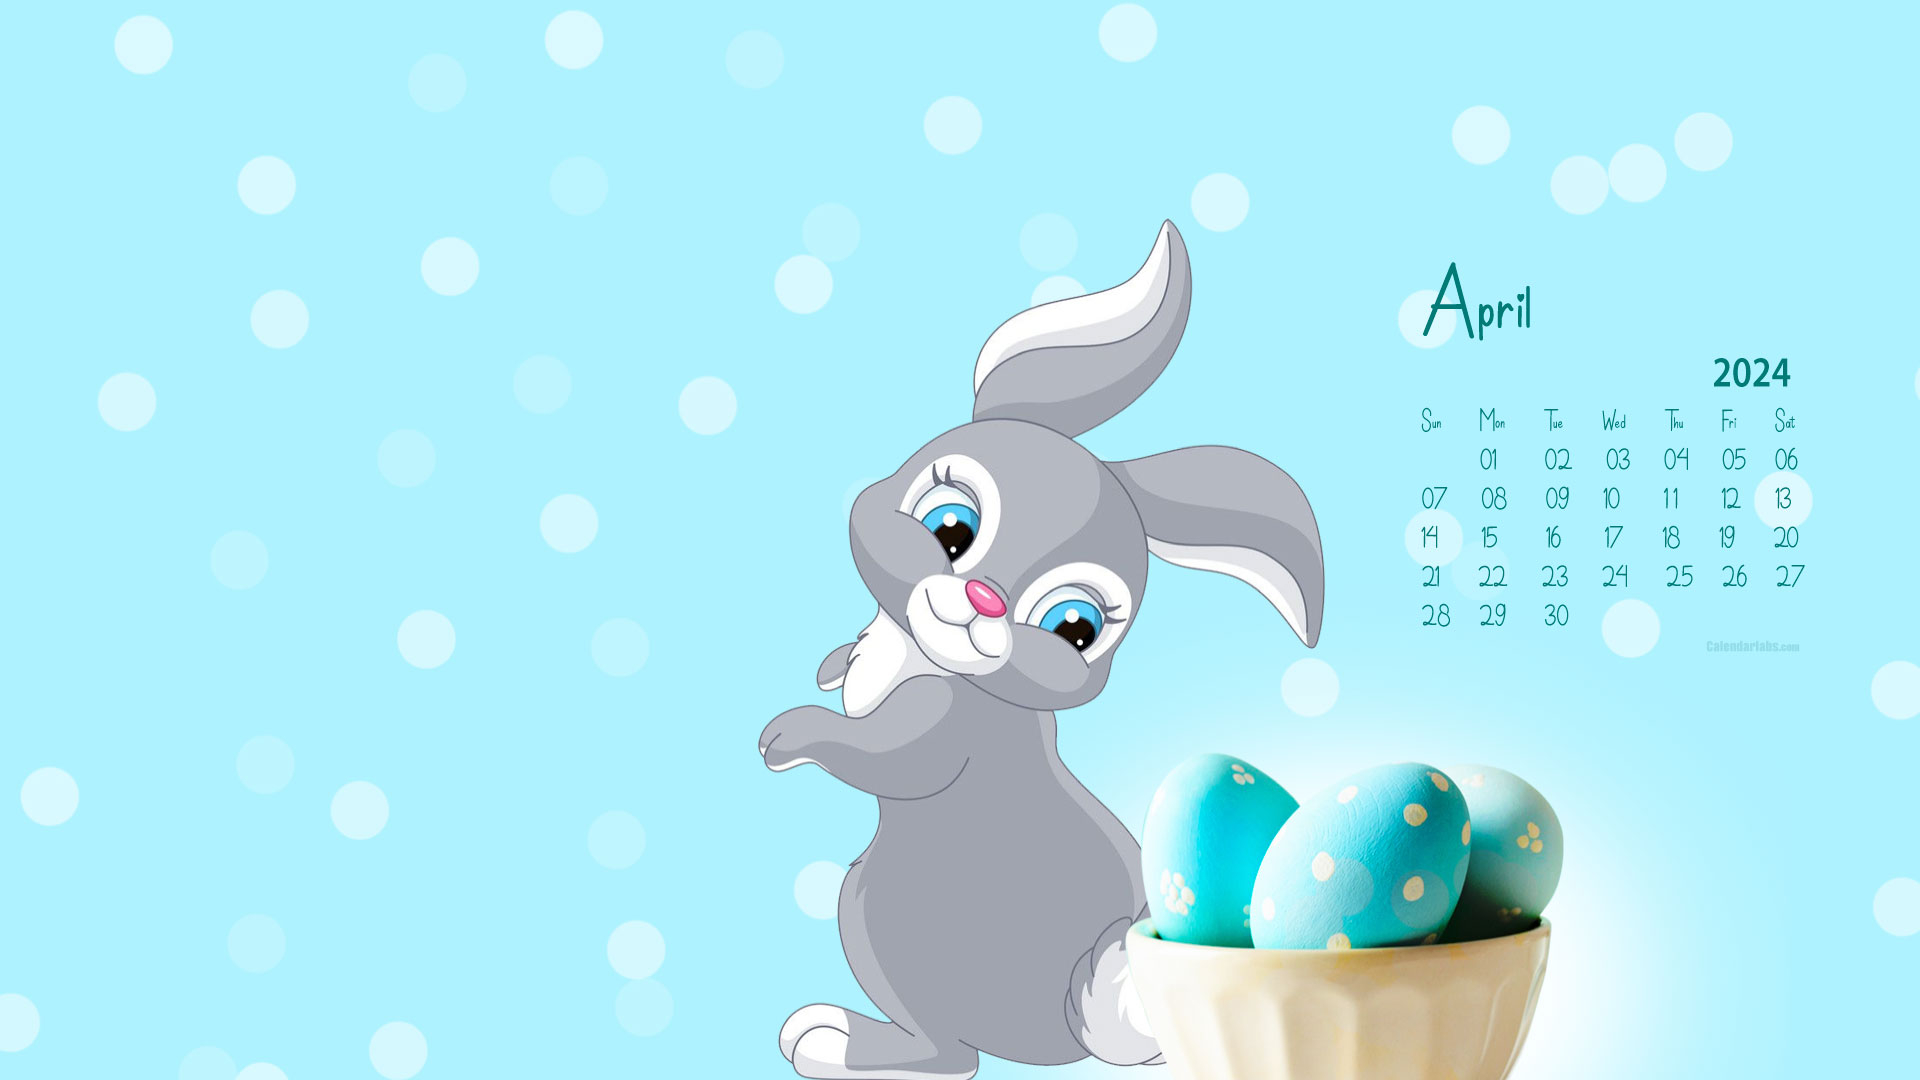 April 2024 Desktop Wallpaper Calendar - Calendarlabs intended for April 2024 Calendar Desktop Wallpaper